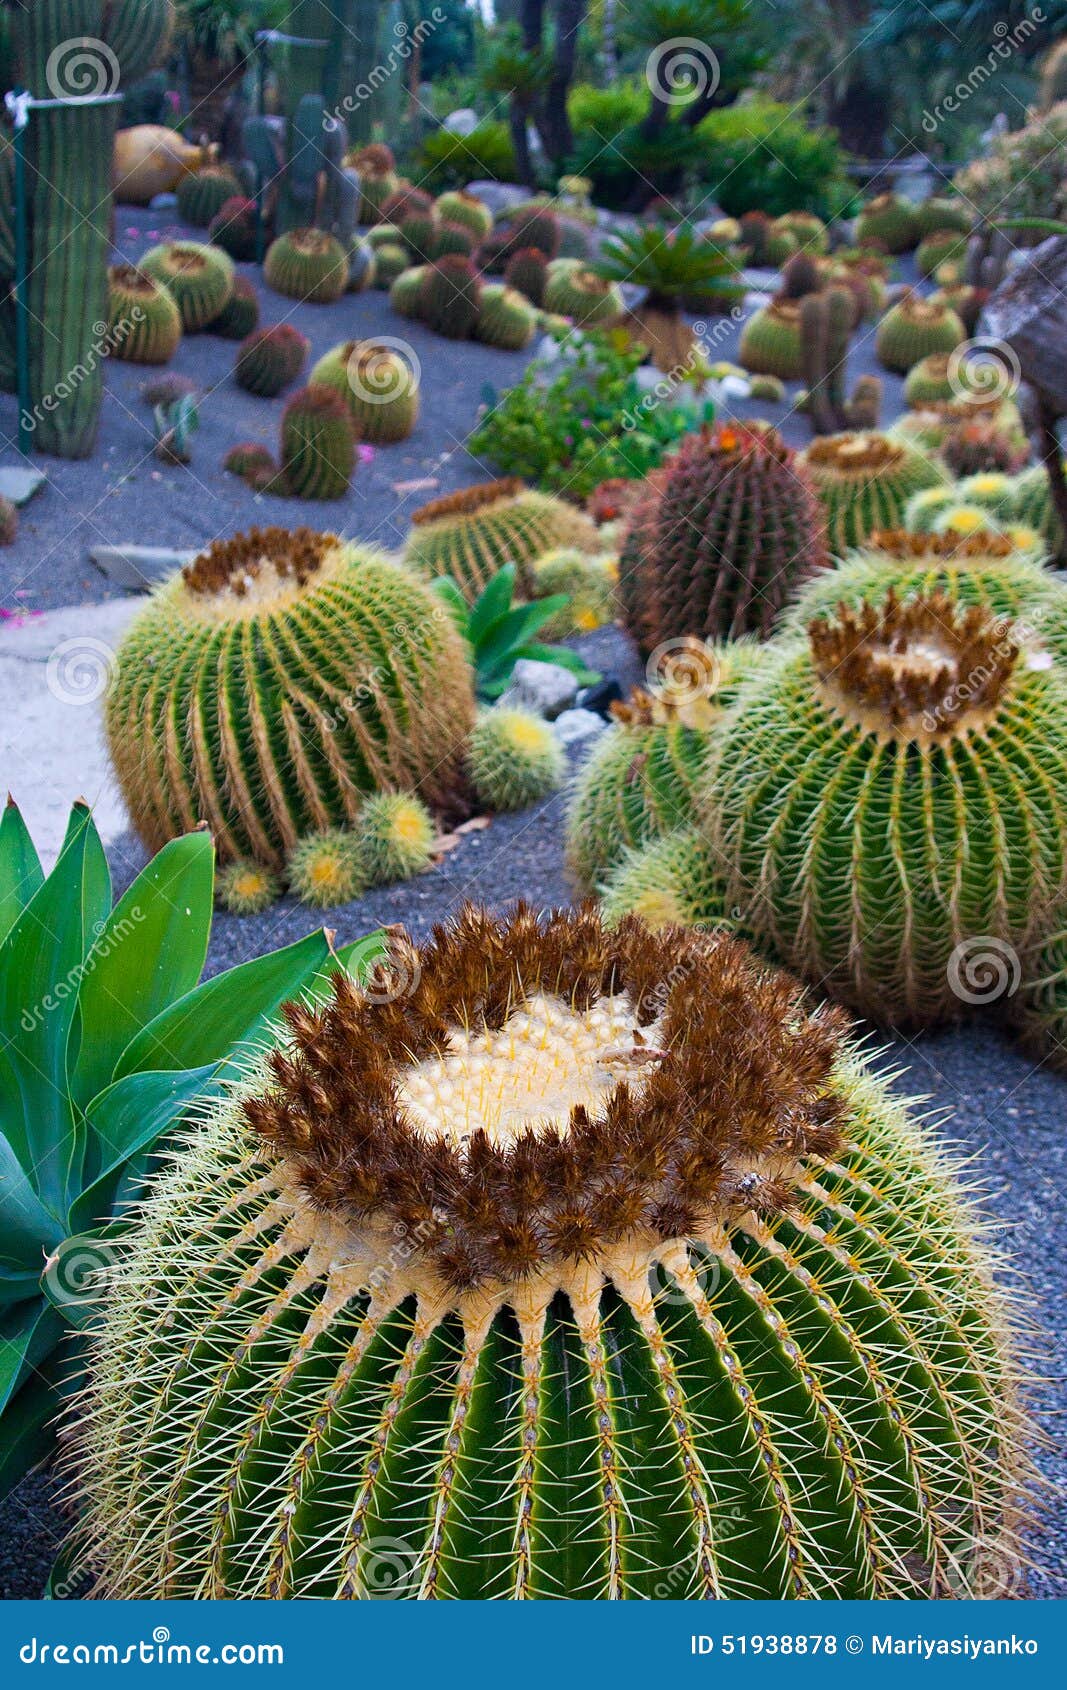 beautiful cactus in the giardini ravino botanical garden on ischia island, italy